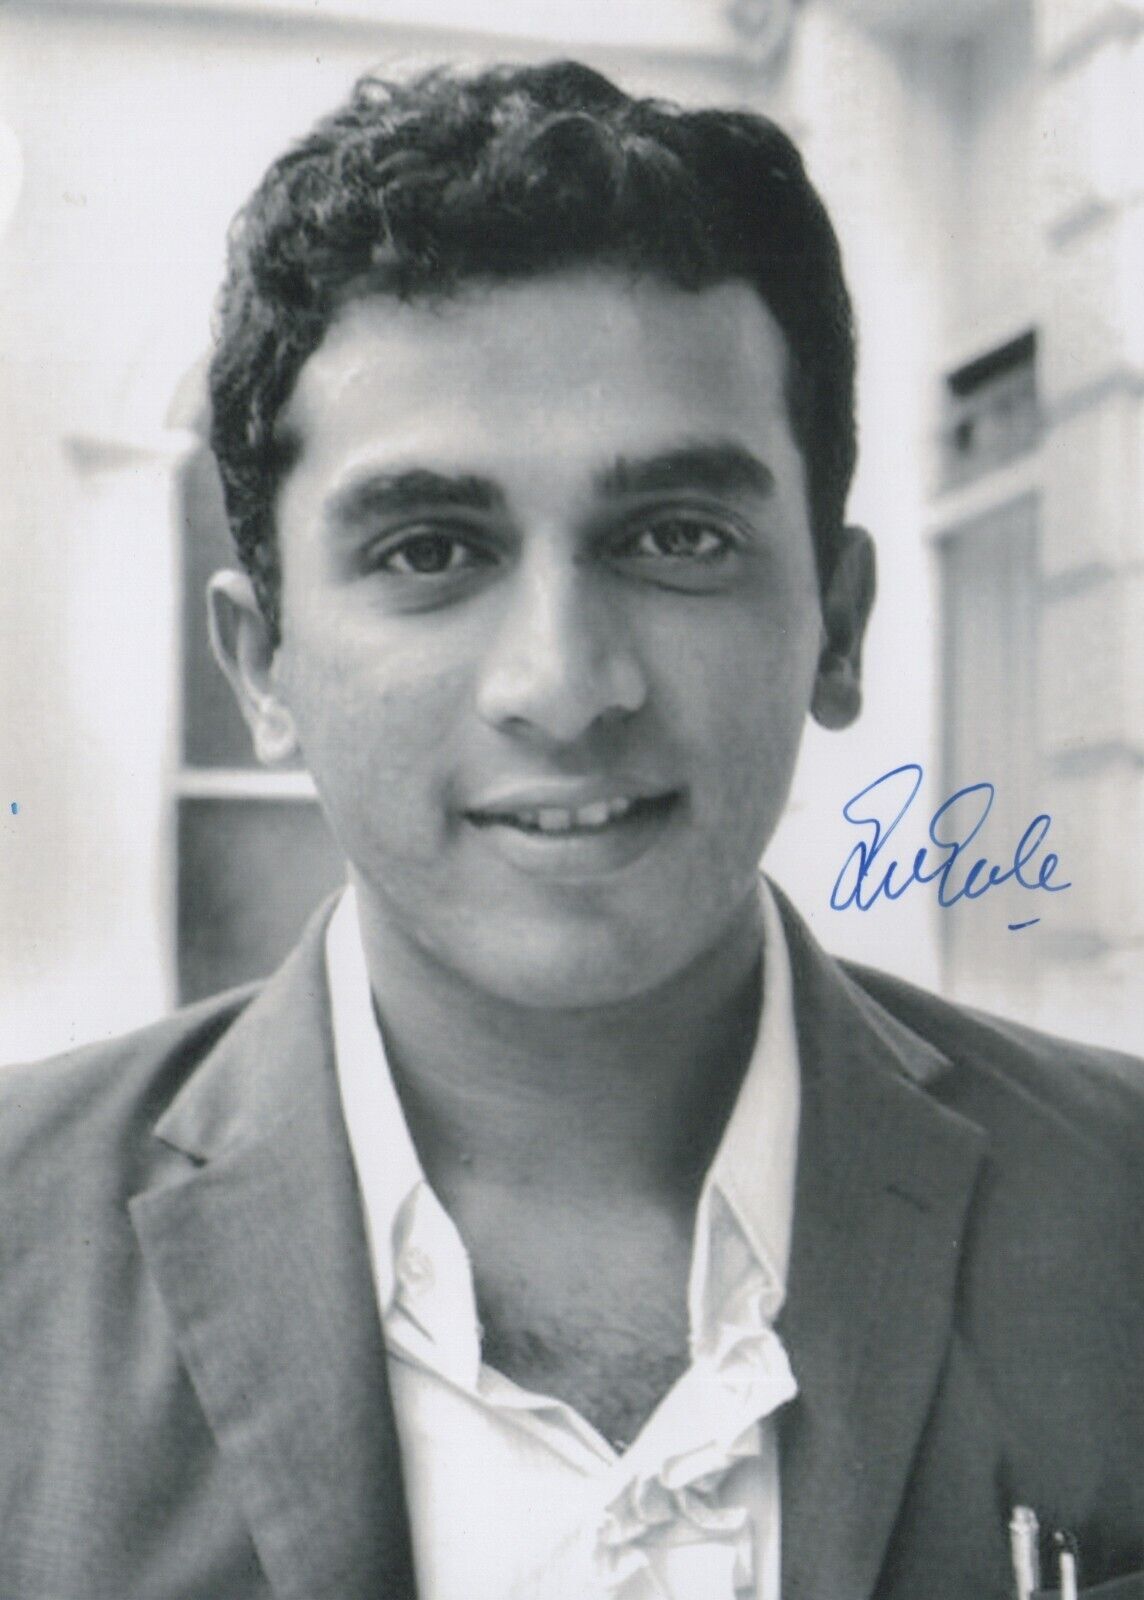 5x7 Original Autographed Photo of Former Indian Cricketer Sunil Gavaskar